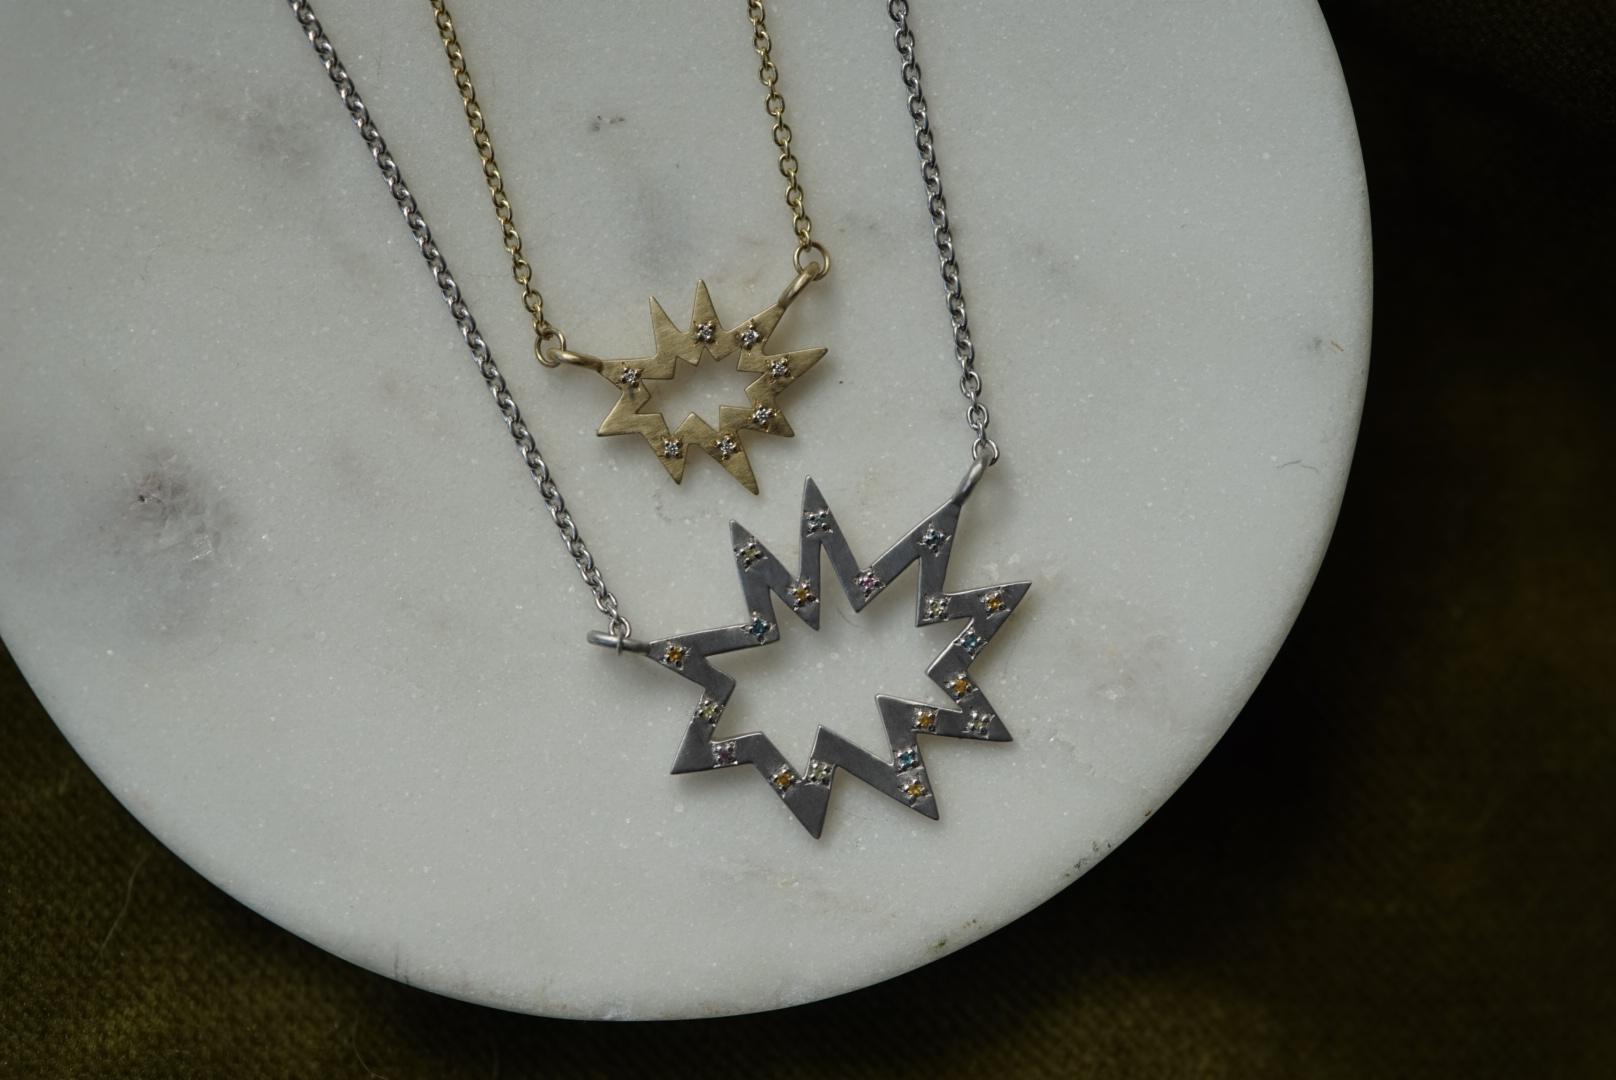 Contemporary Silver Stella Nova Star Necklace with Colored Gemstones